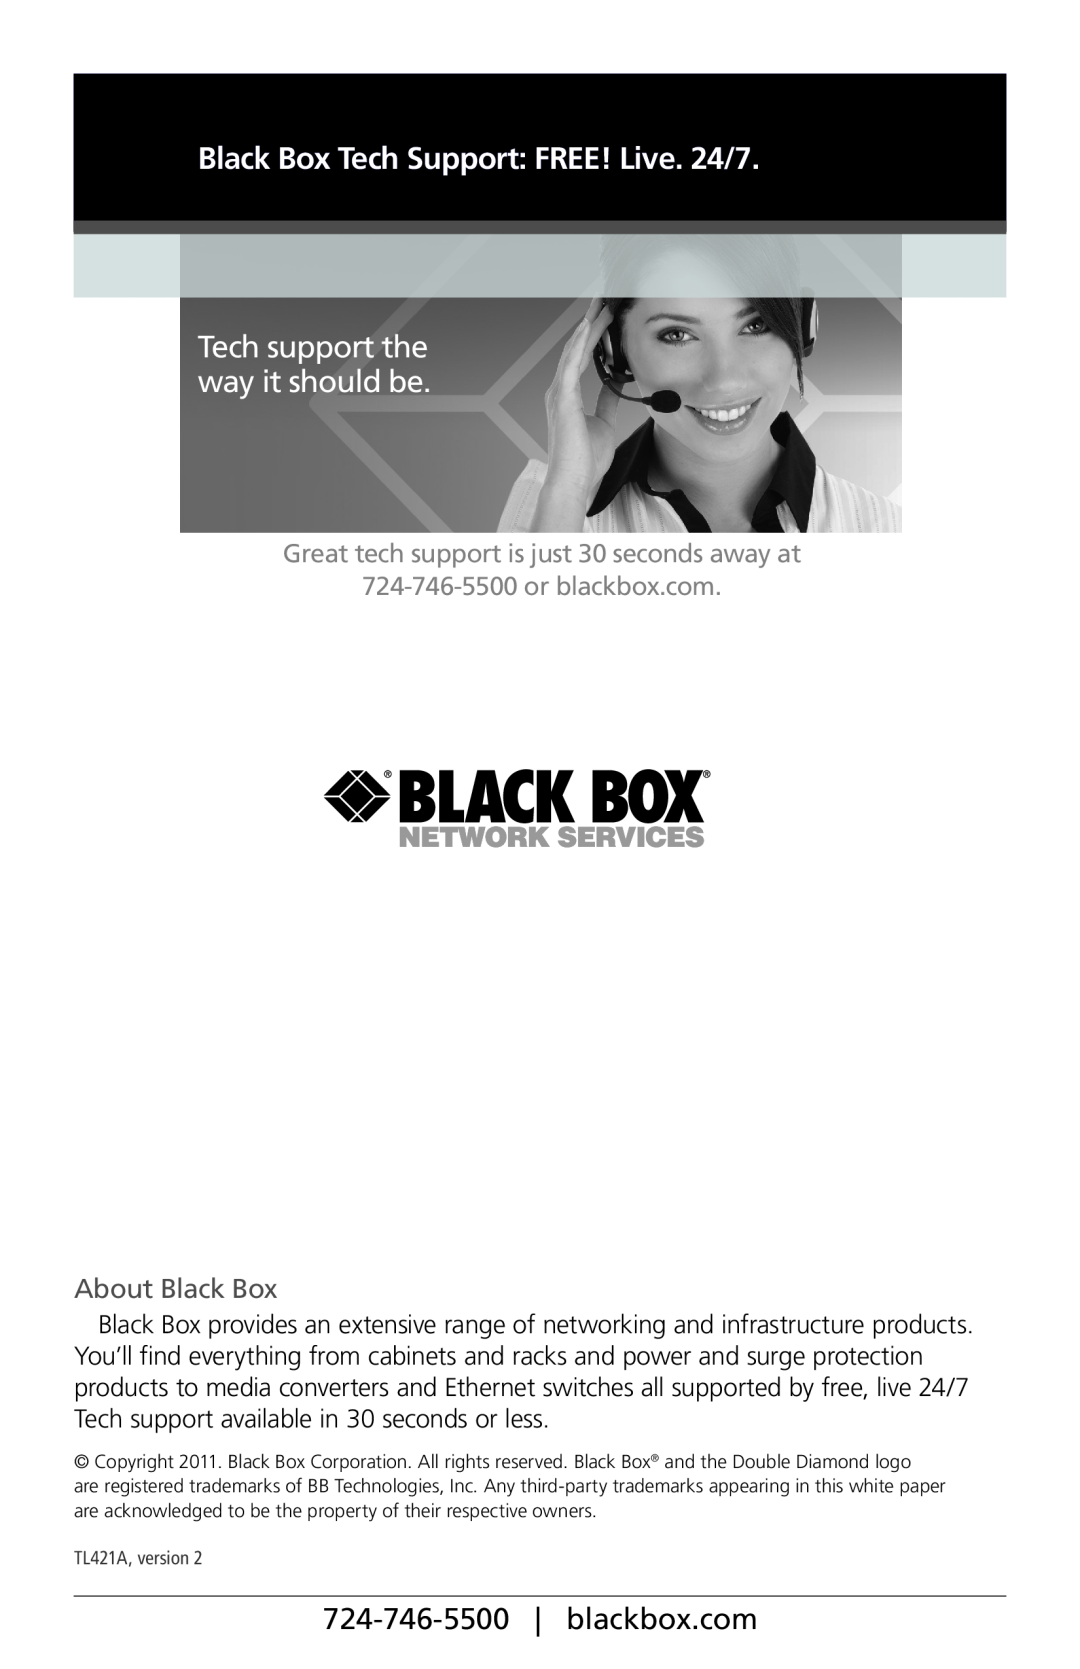 Black Box TL421A manual Tech support the way it should be, About Black Box, Black Box Tech Support FREE! Live. 24/7 